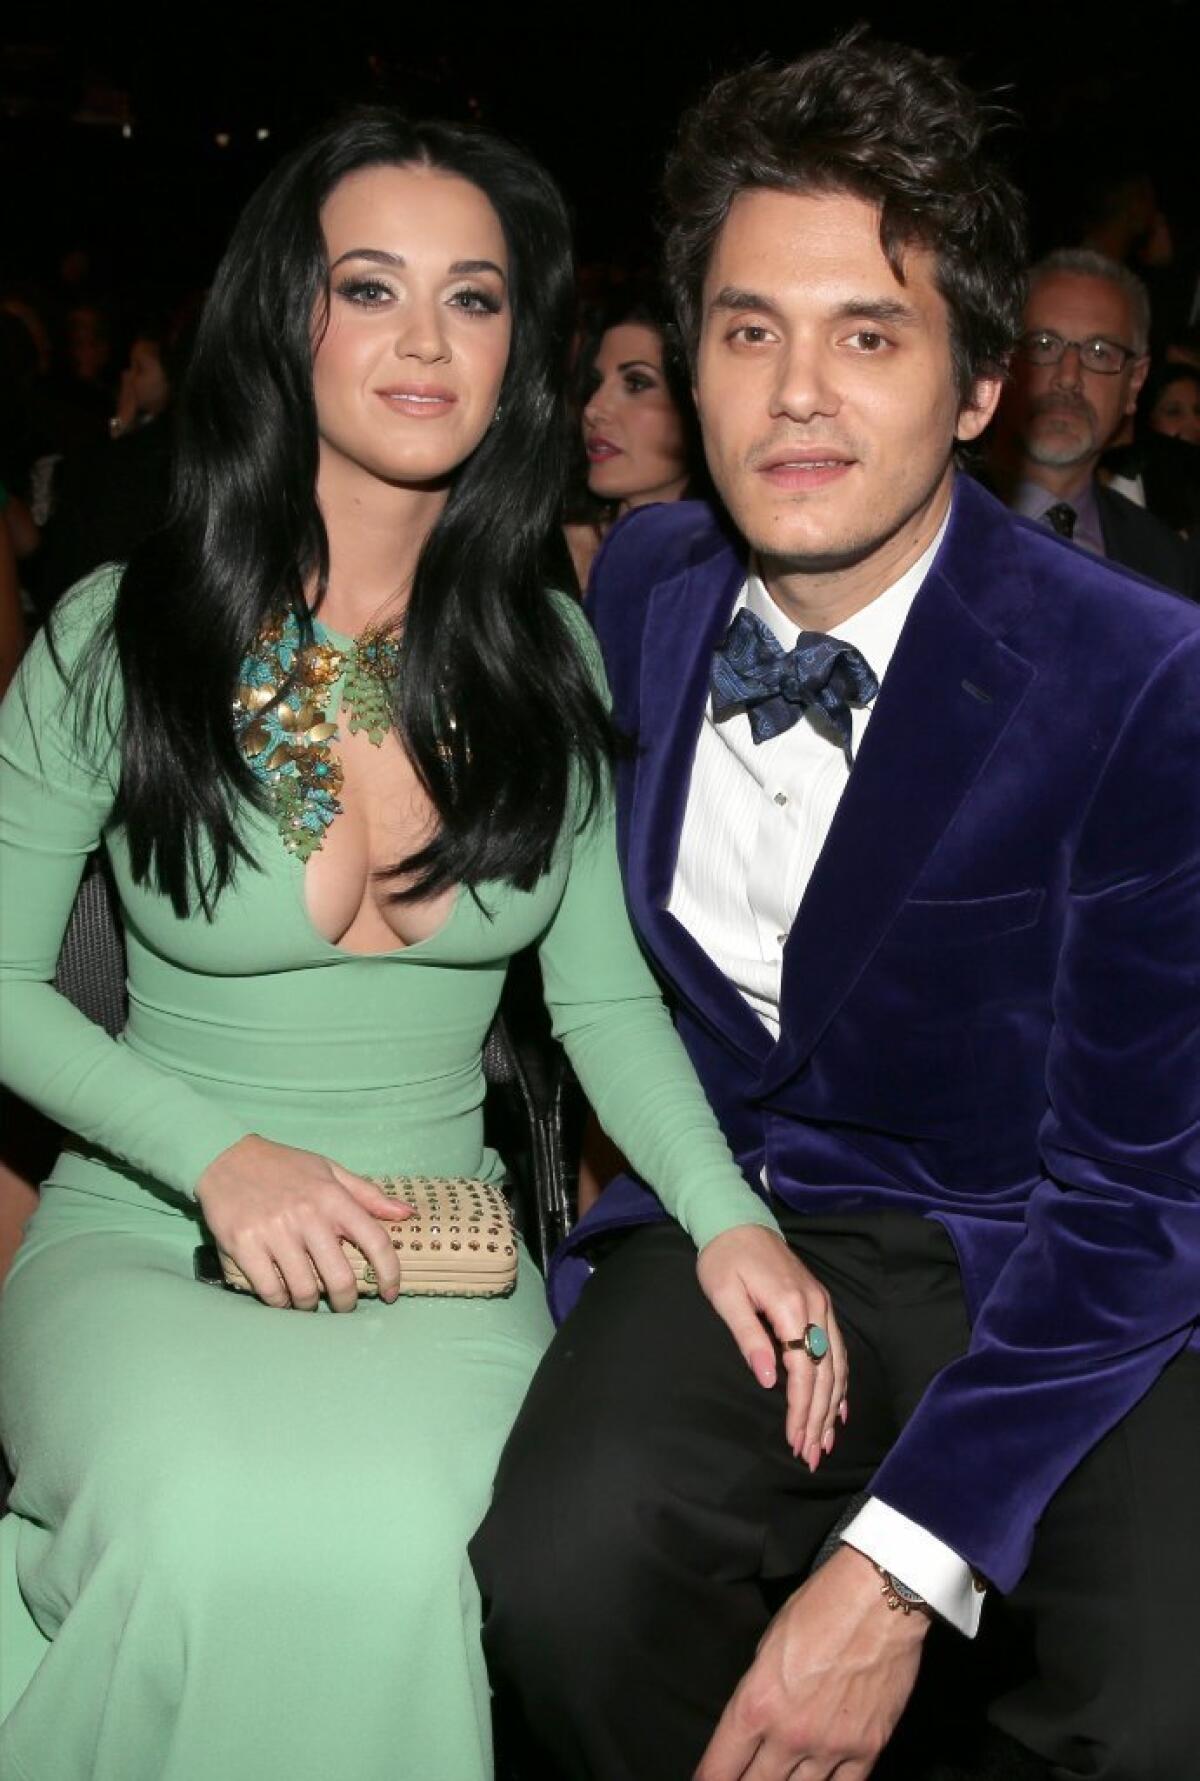 Katy Perry and beau John Mayer at this year's Grammy Awards.